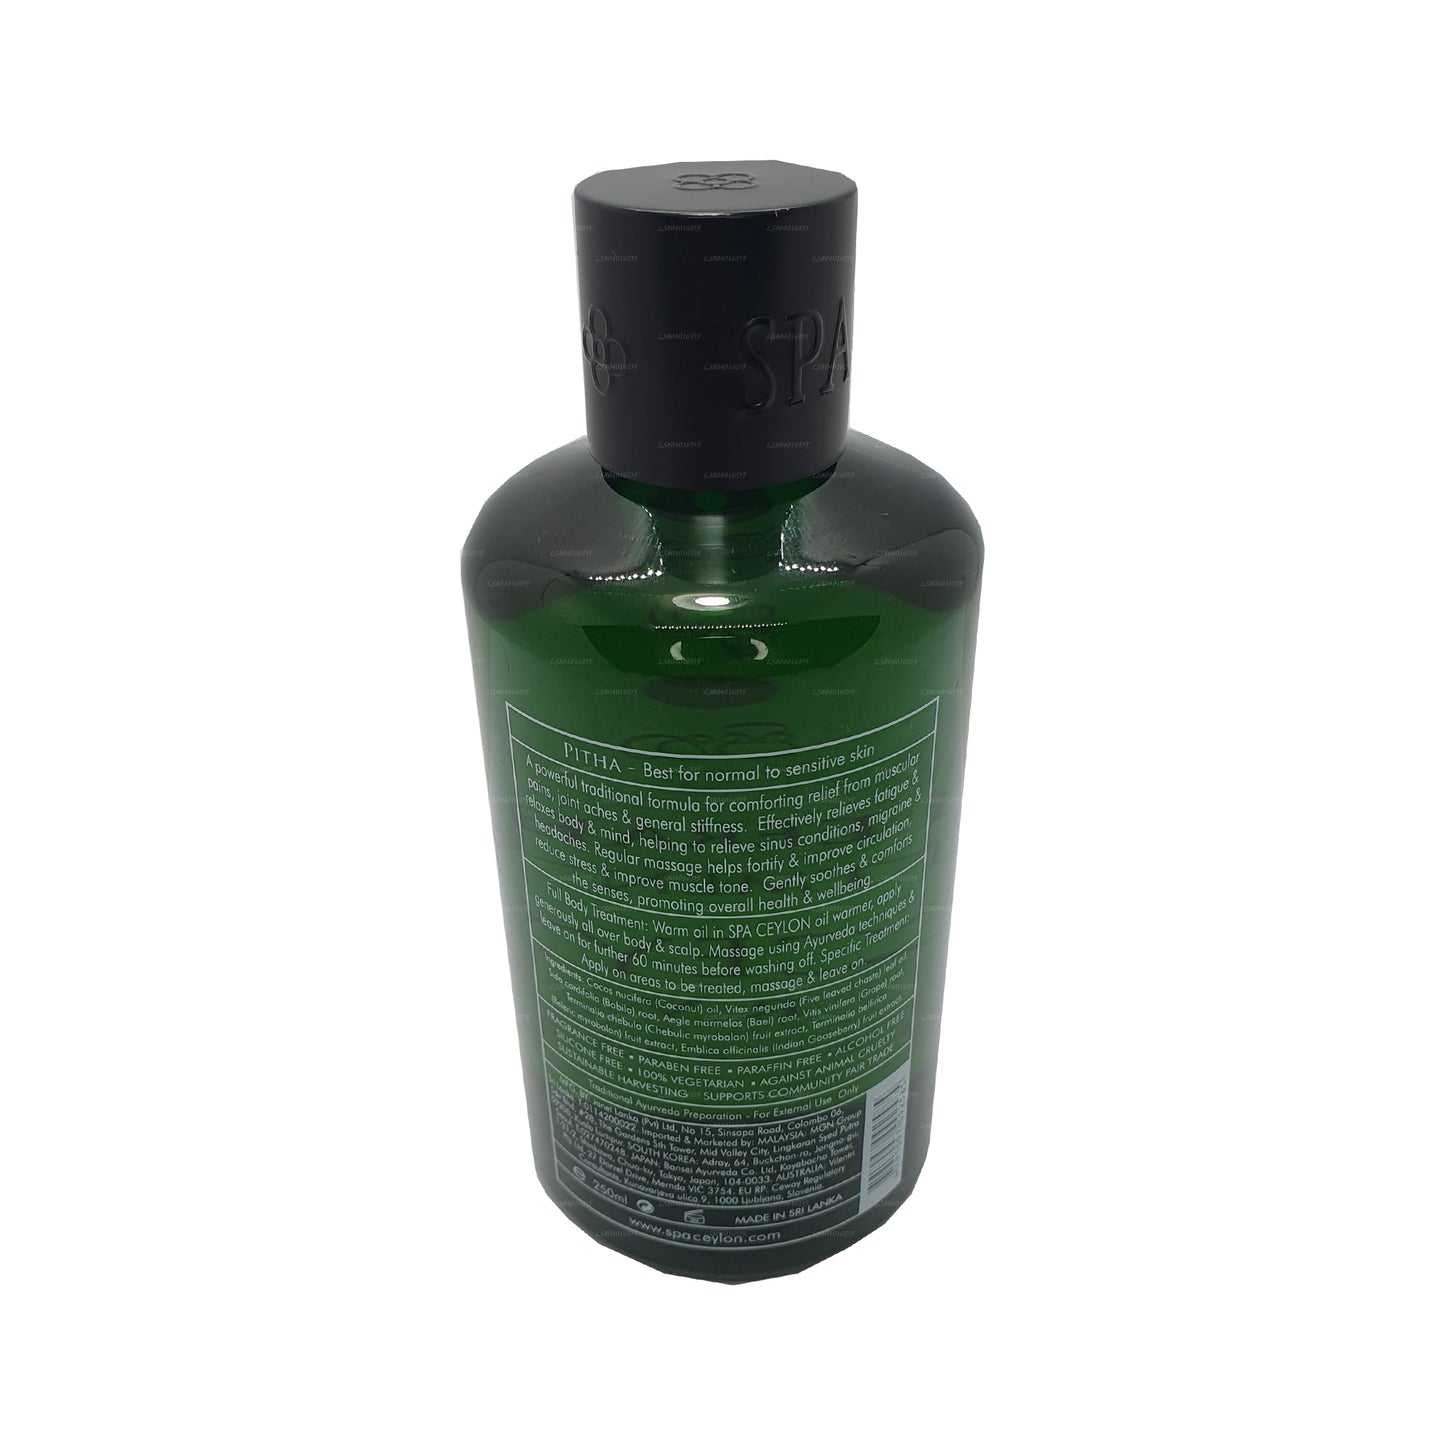 Spa Ceylon Ksheerabala - Aceite de tratamiento (250 ml)